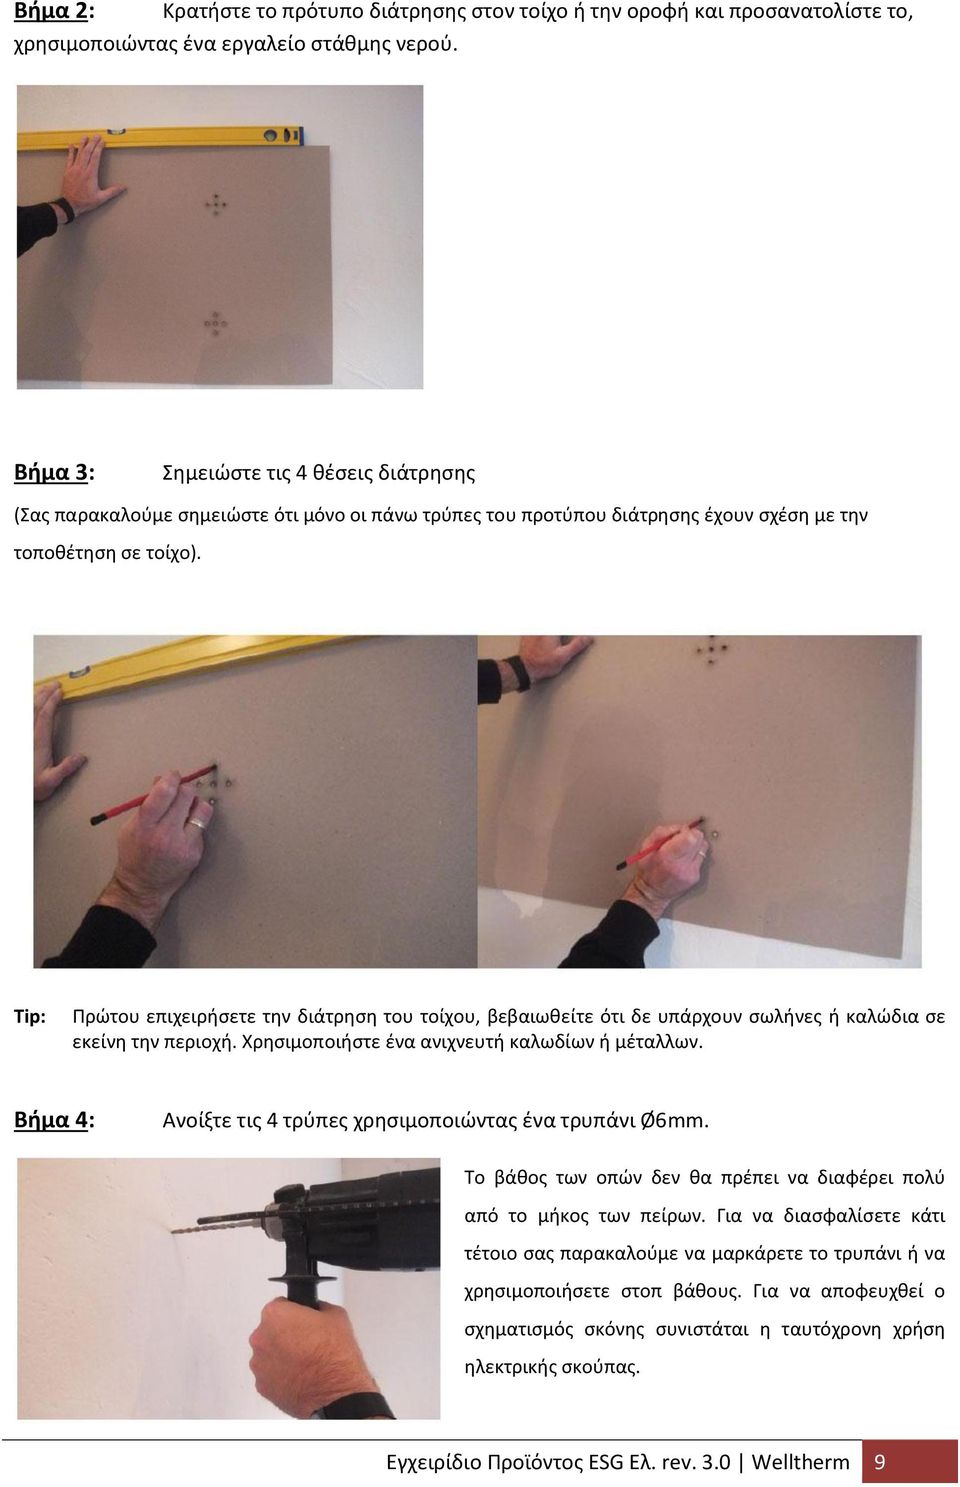 Tip: Πρώτου επιχειρήσετε την διάτρηση του τοίχου, βεβαιωθείτε ότι δε υπάρχουν σωλήνες ή καλώδια σε εκείνη την περιοχή. Χρησιμοποιήστε ένα ανιχνευτή καλωδίων ή μέταλλων.